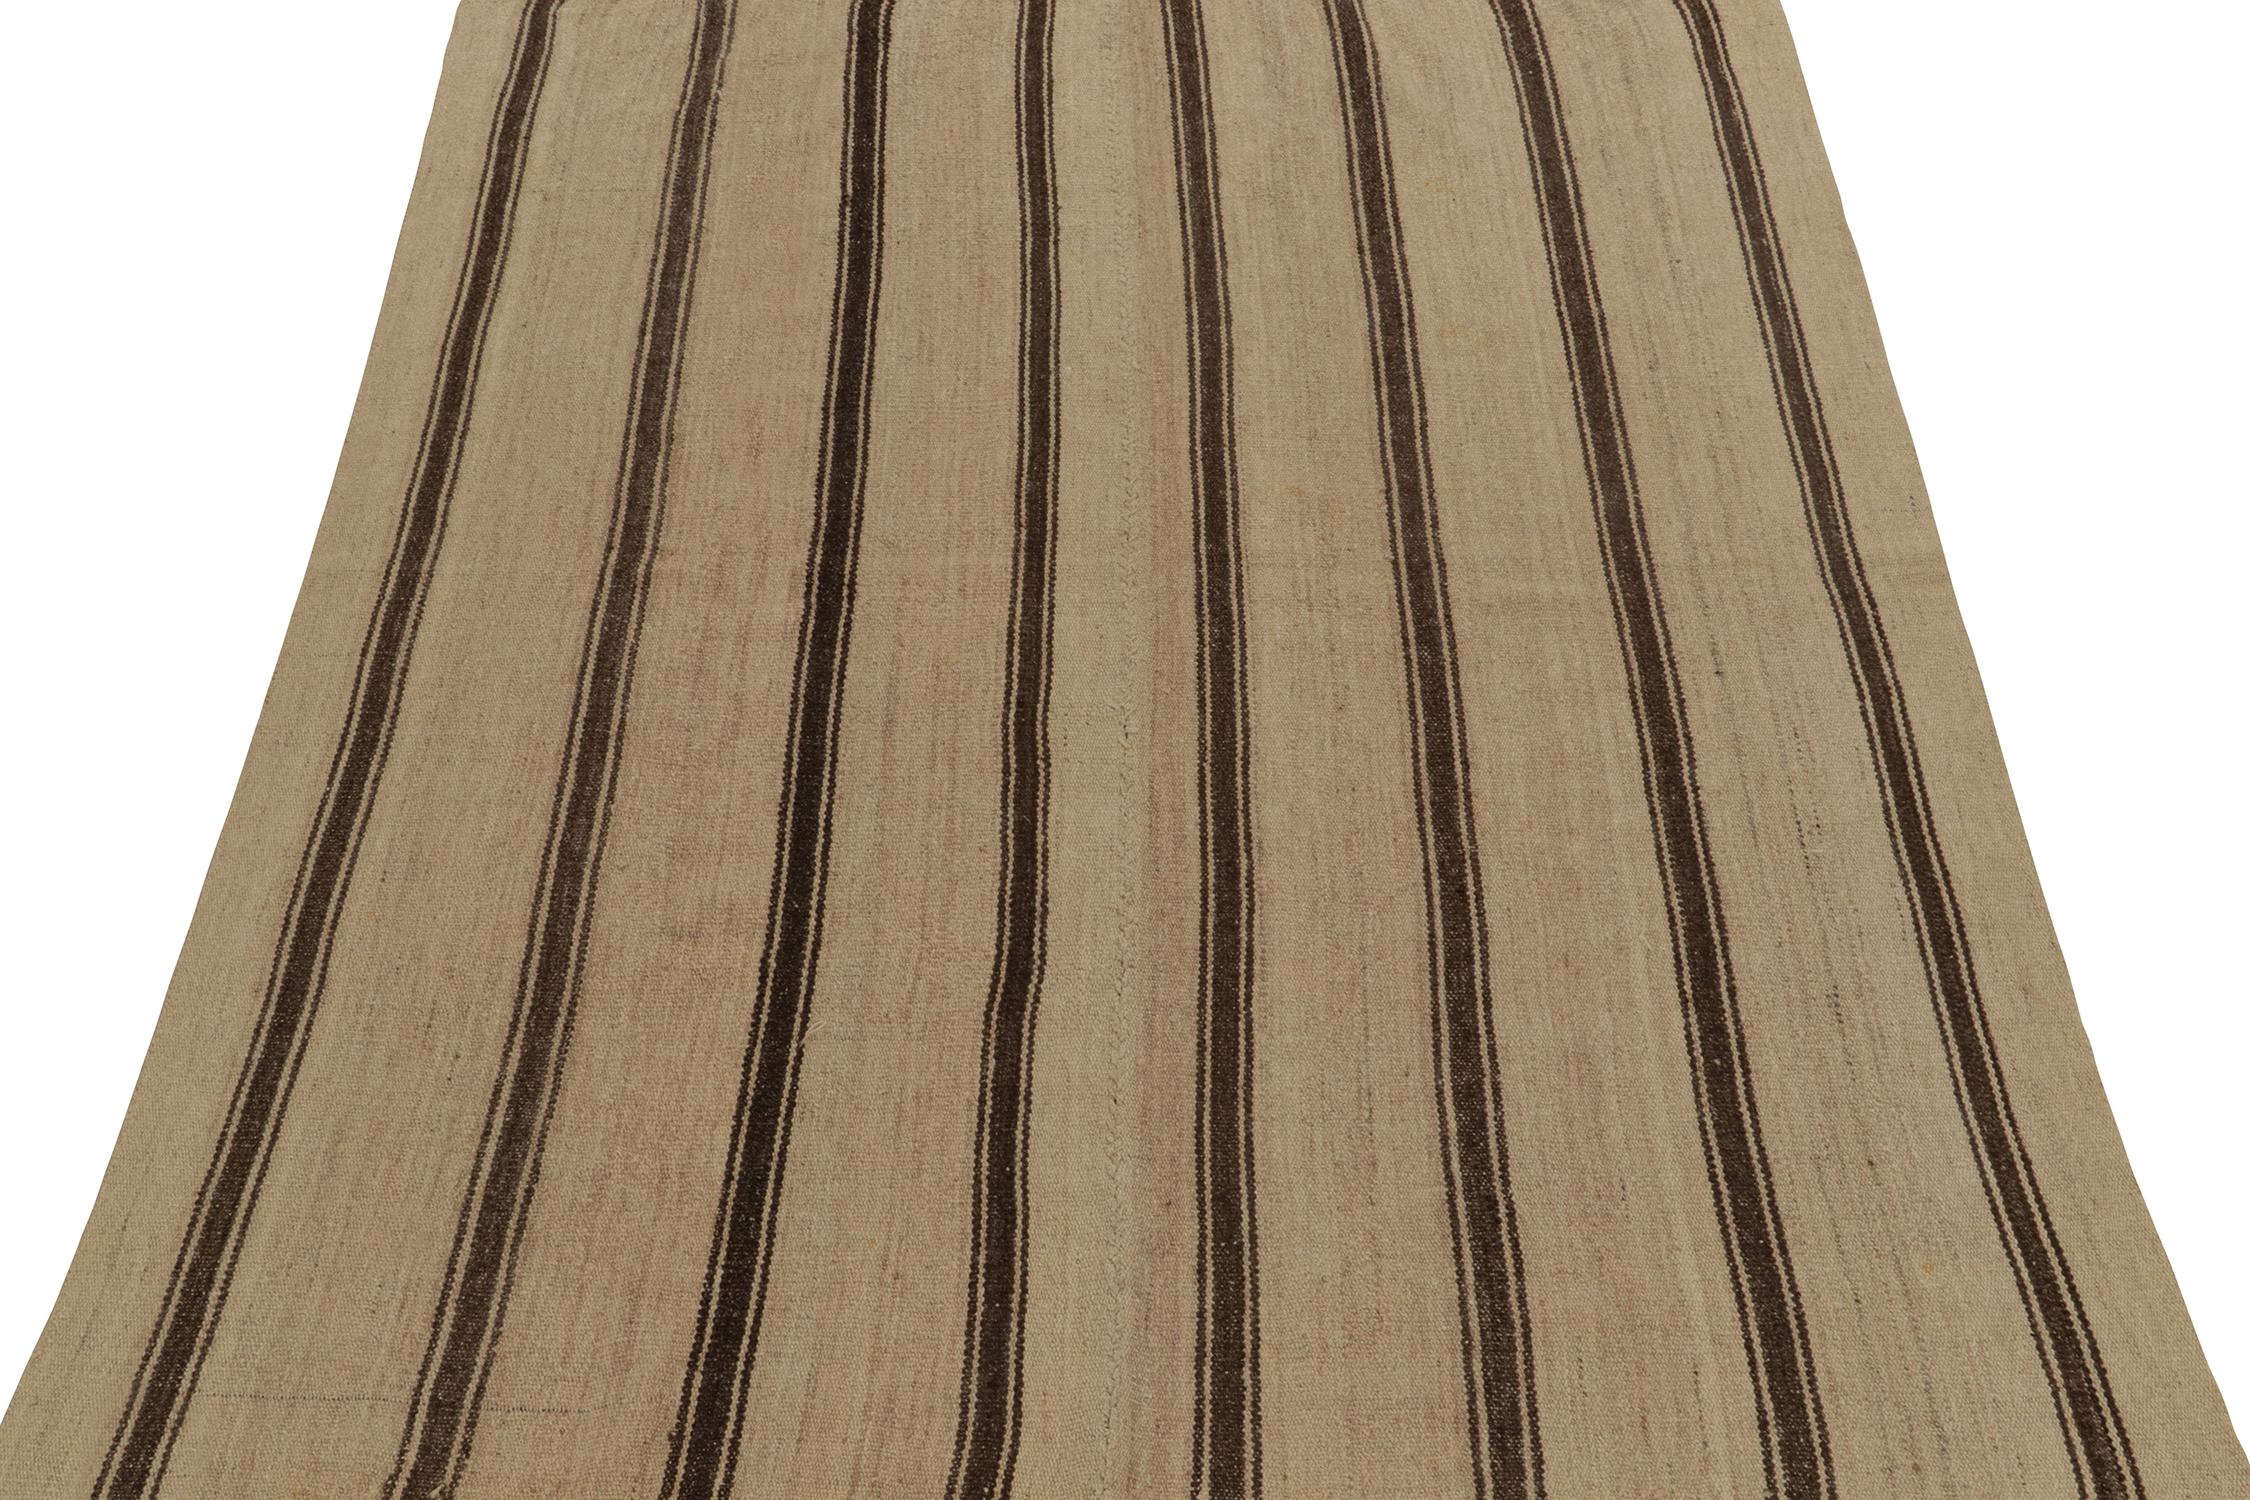 Turkish Handwoven Vintage Kilim Beige-Brown Stripe Patterns by Rug & Kilim For Sale